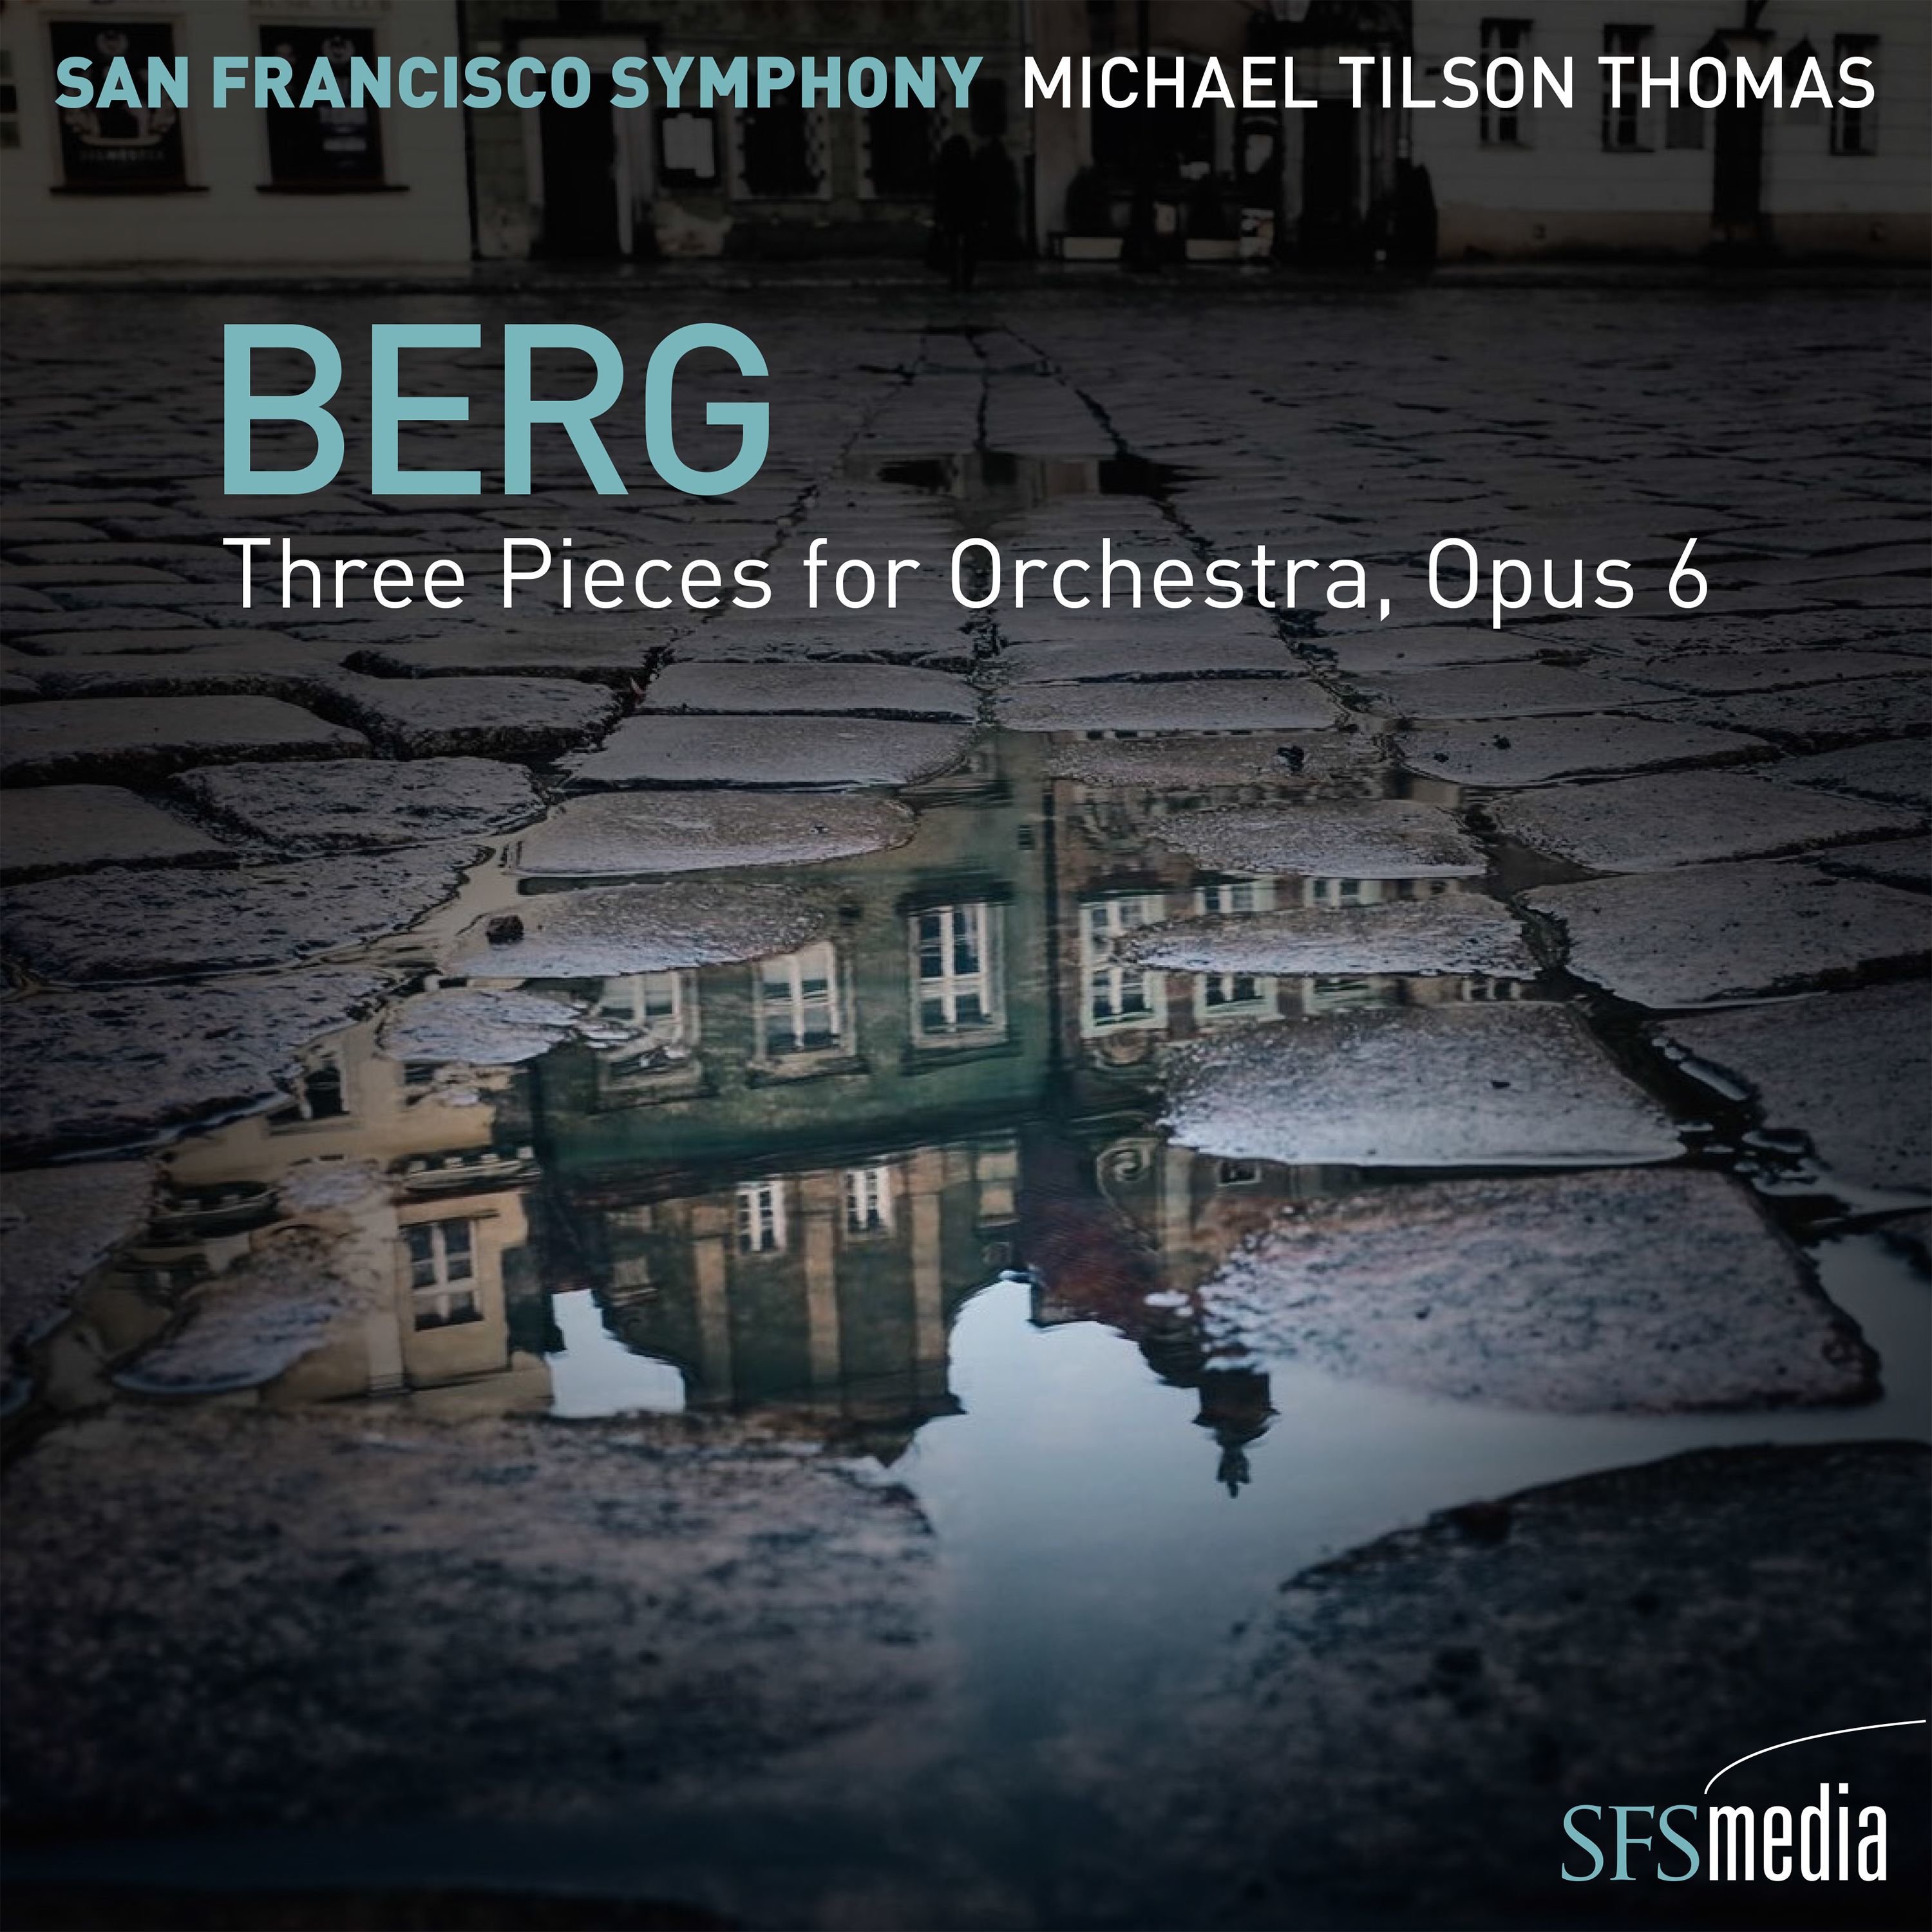 San Francisco Symphony – Berg- Three Pieces for Orchestra